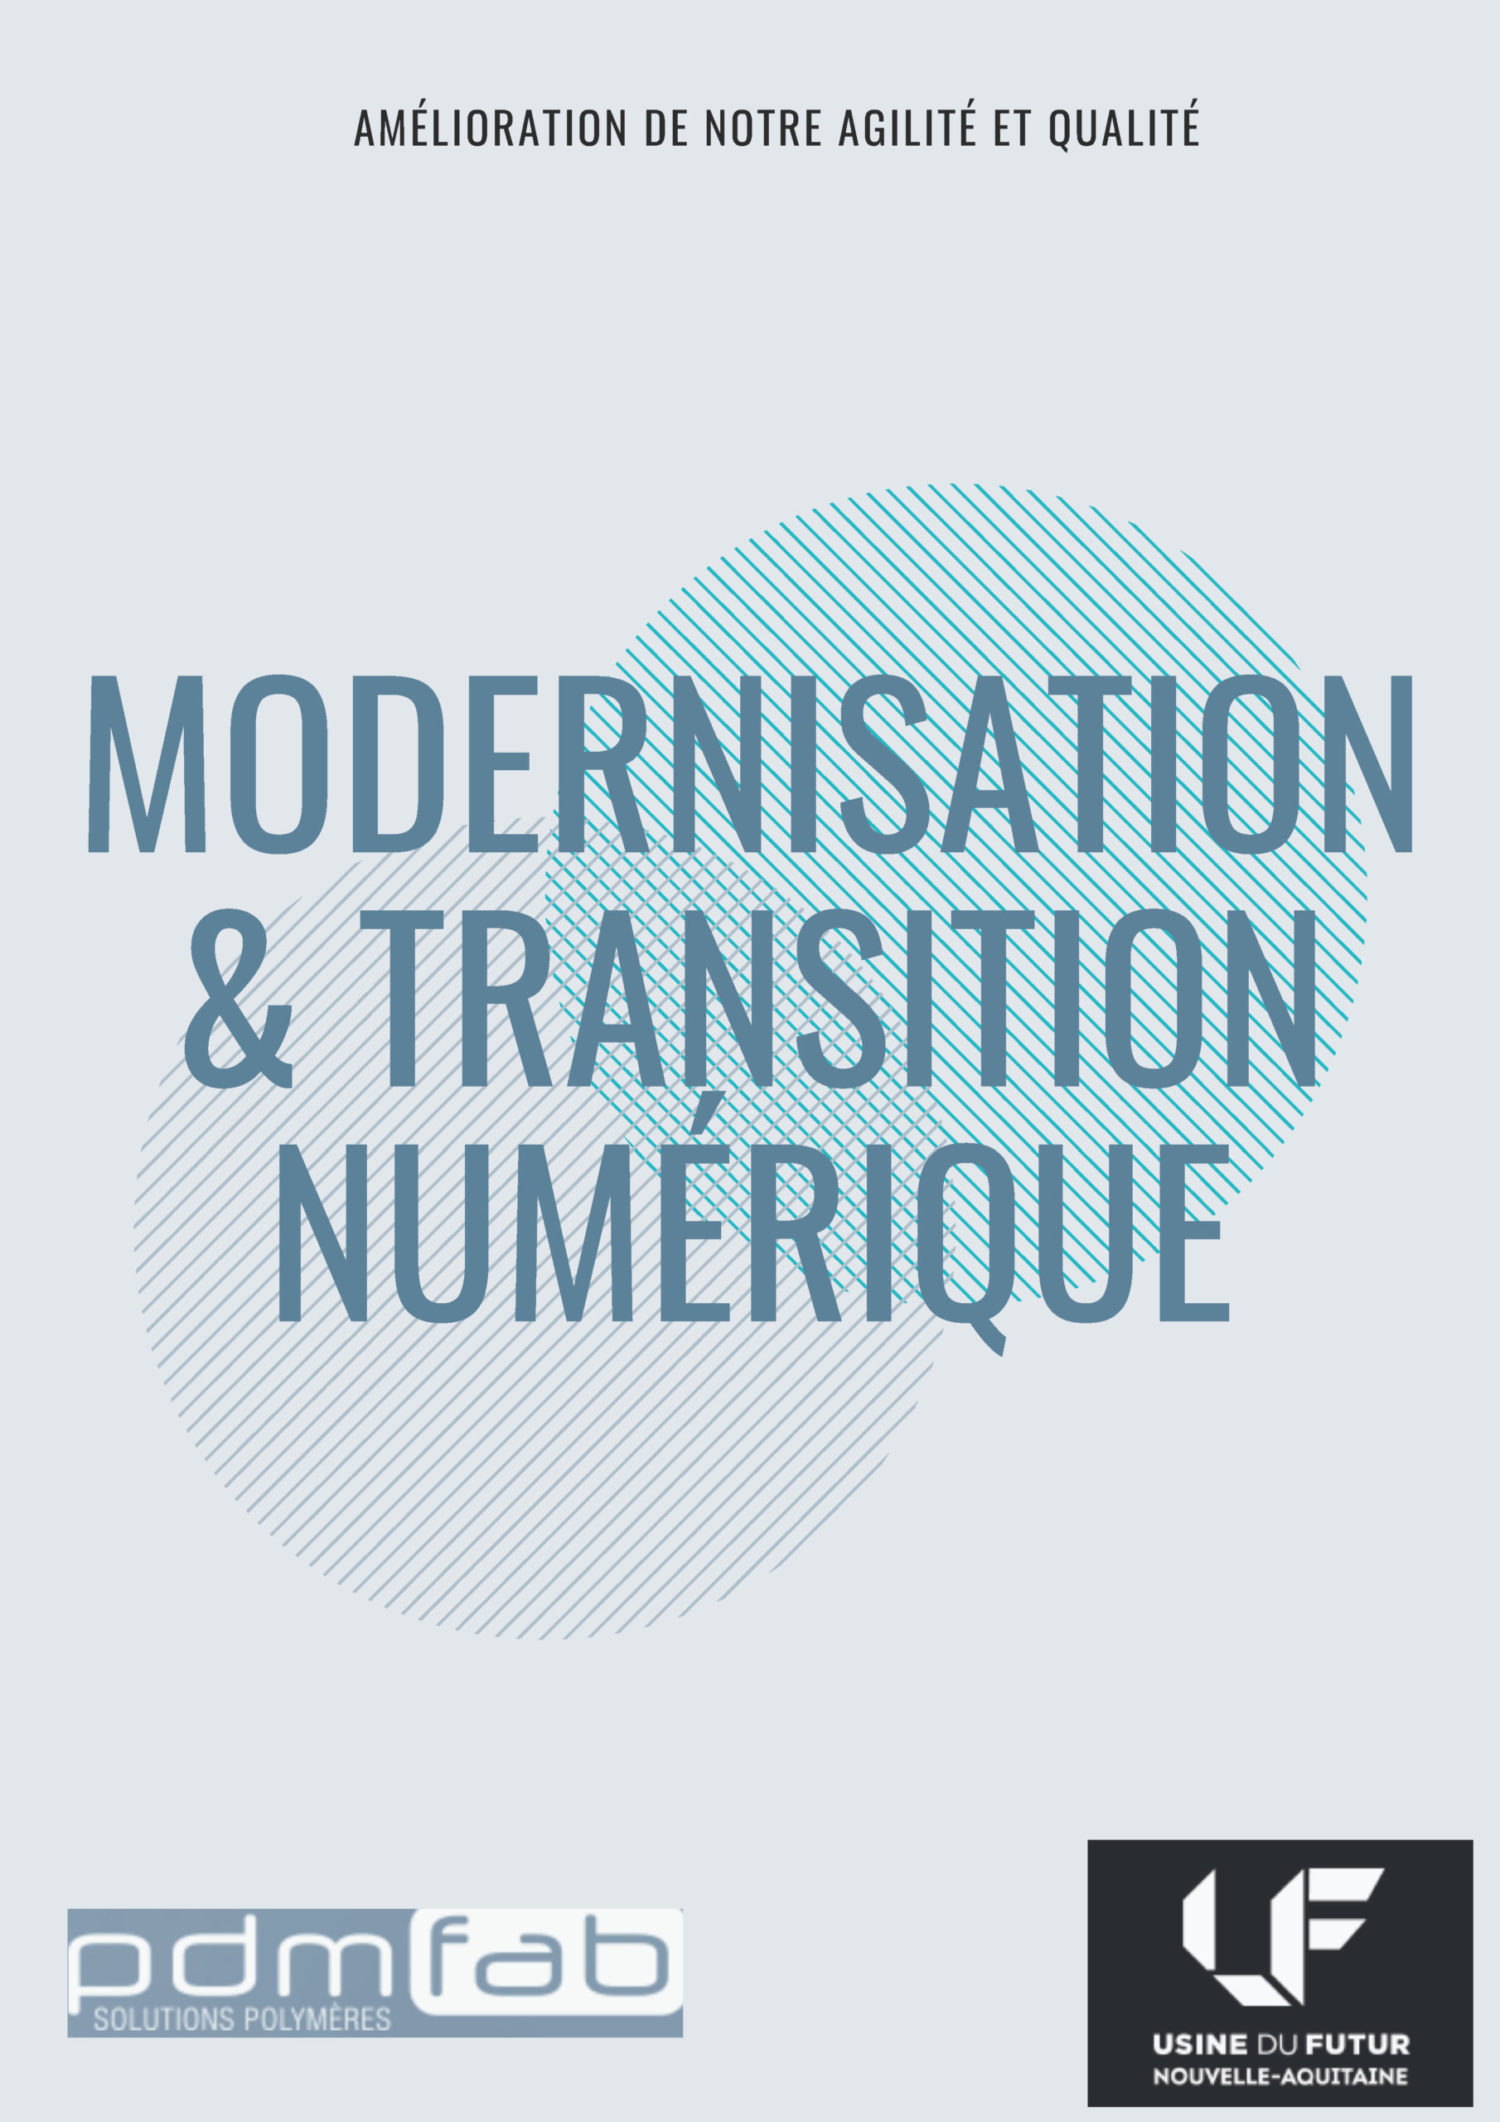 Modernization and digital transition